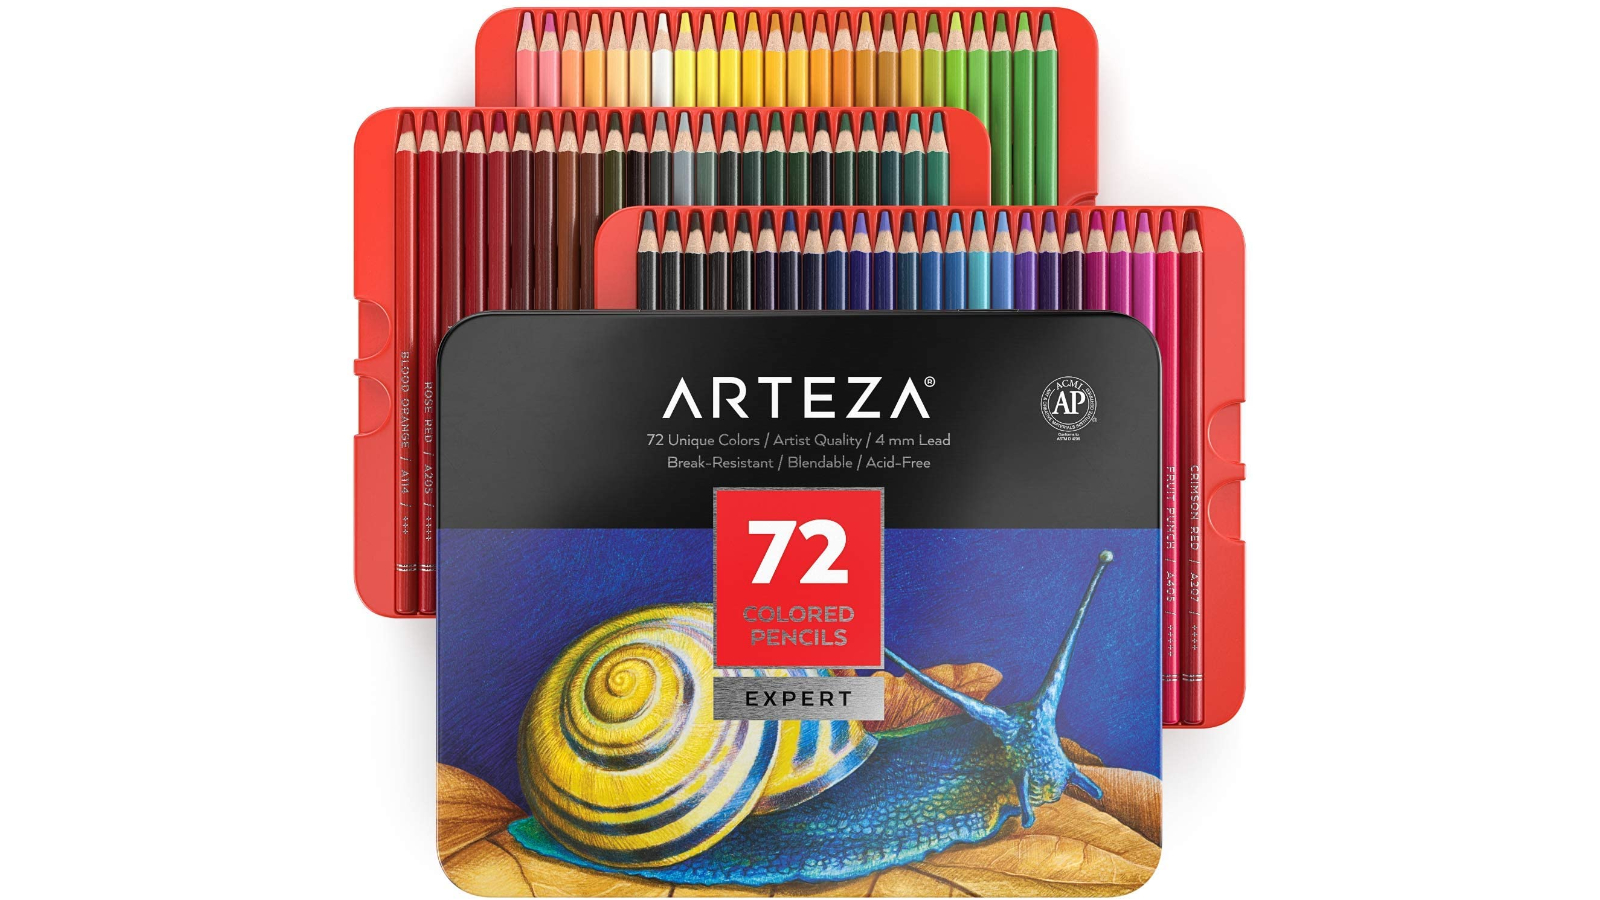 Best coloured pencils: Arteza Colored Pencils